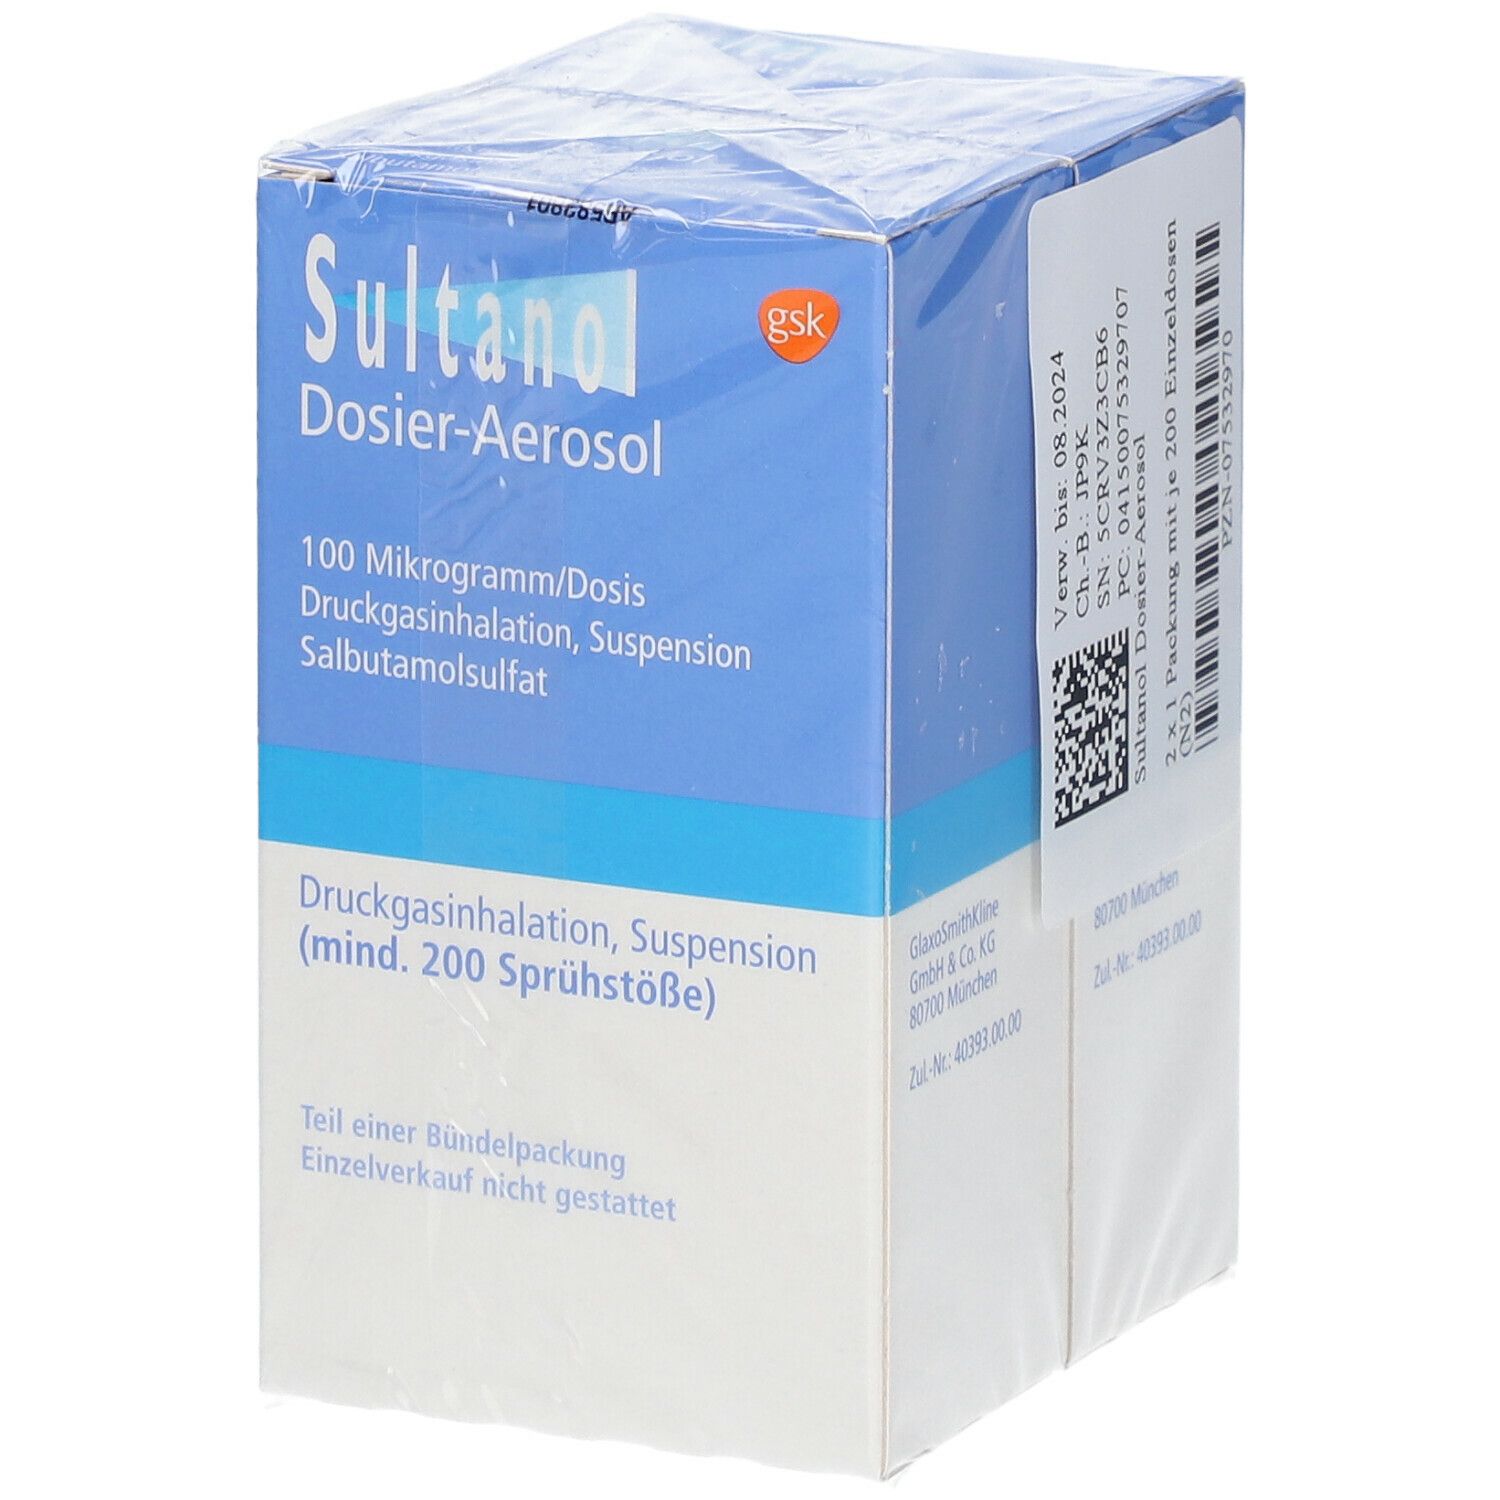 Sultanol® 100 µg/Dosis